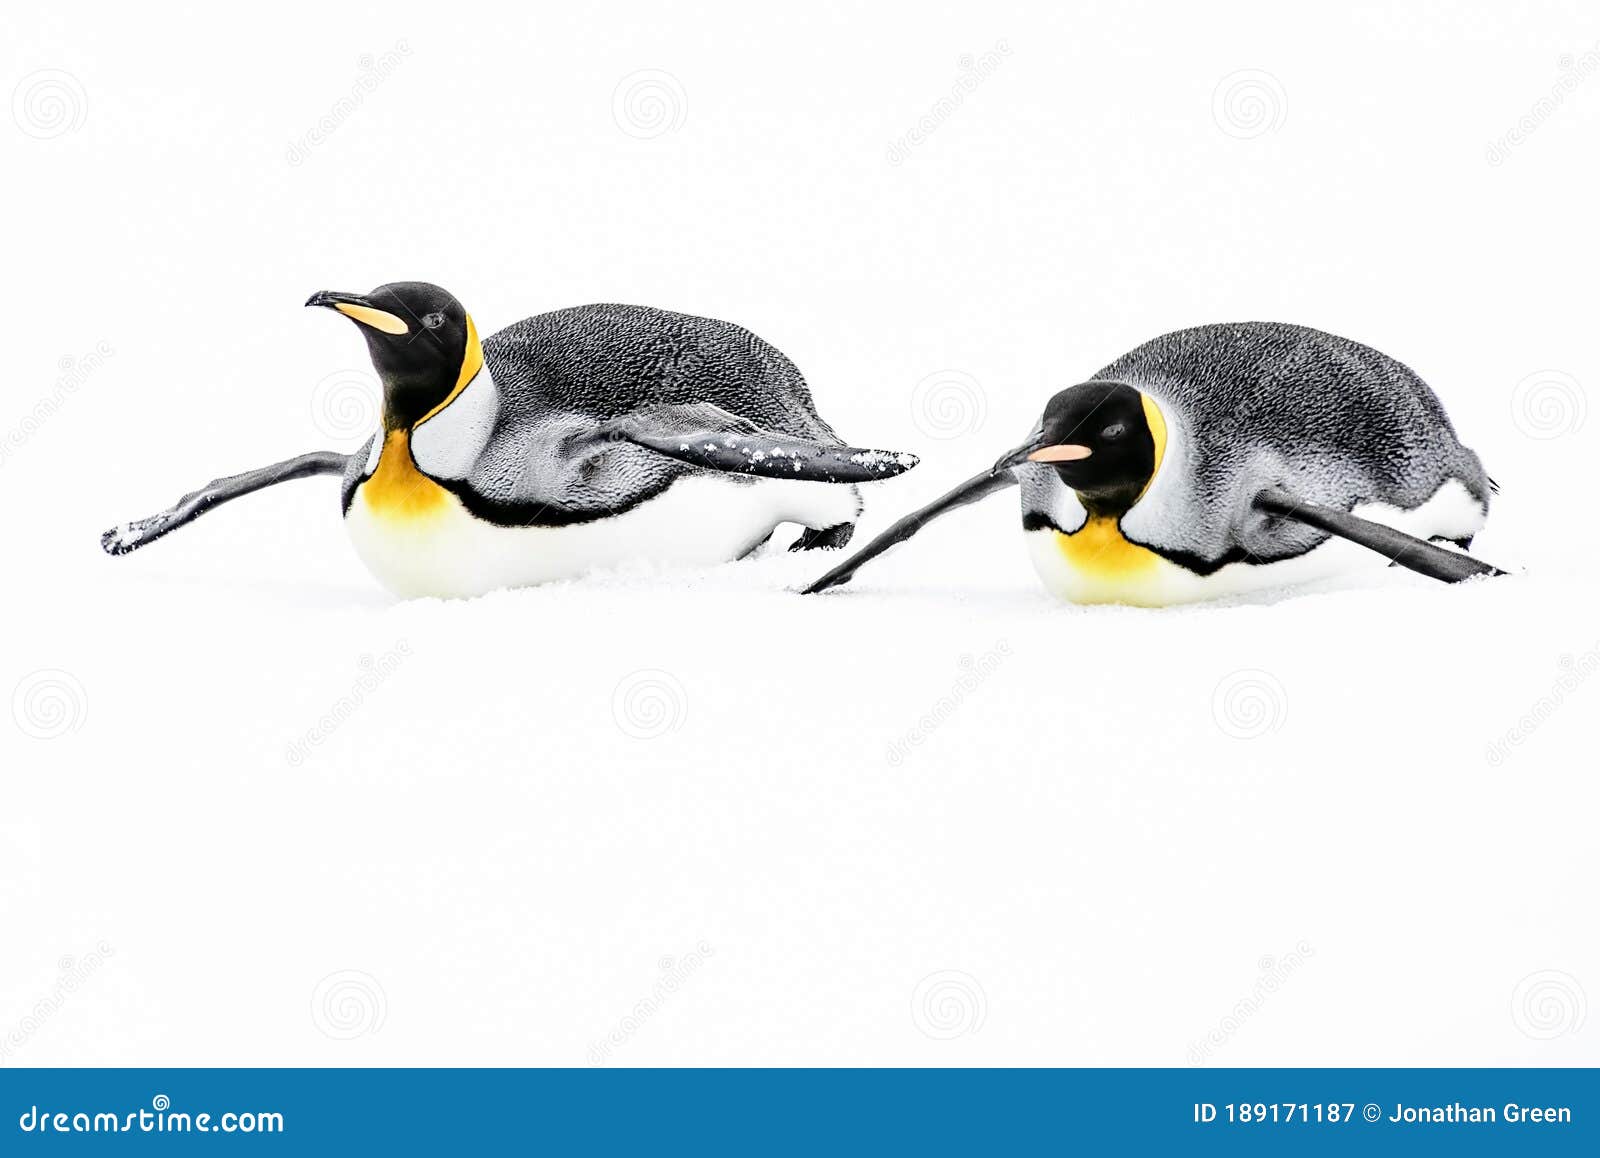 king penguins sledding on ice